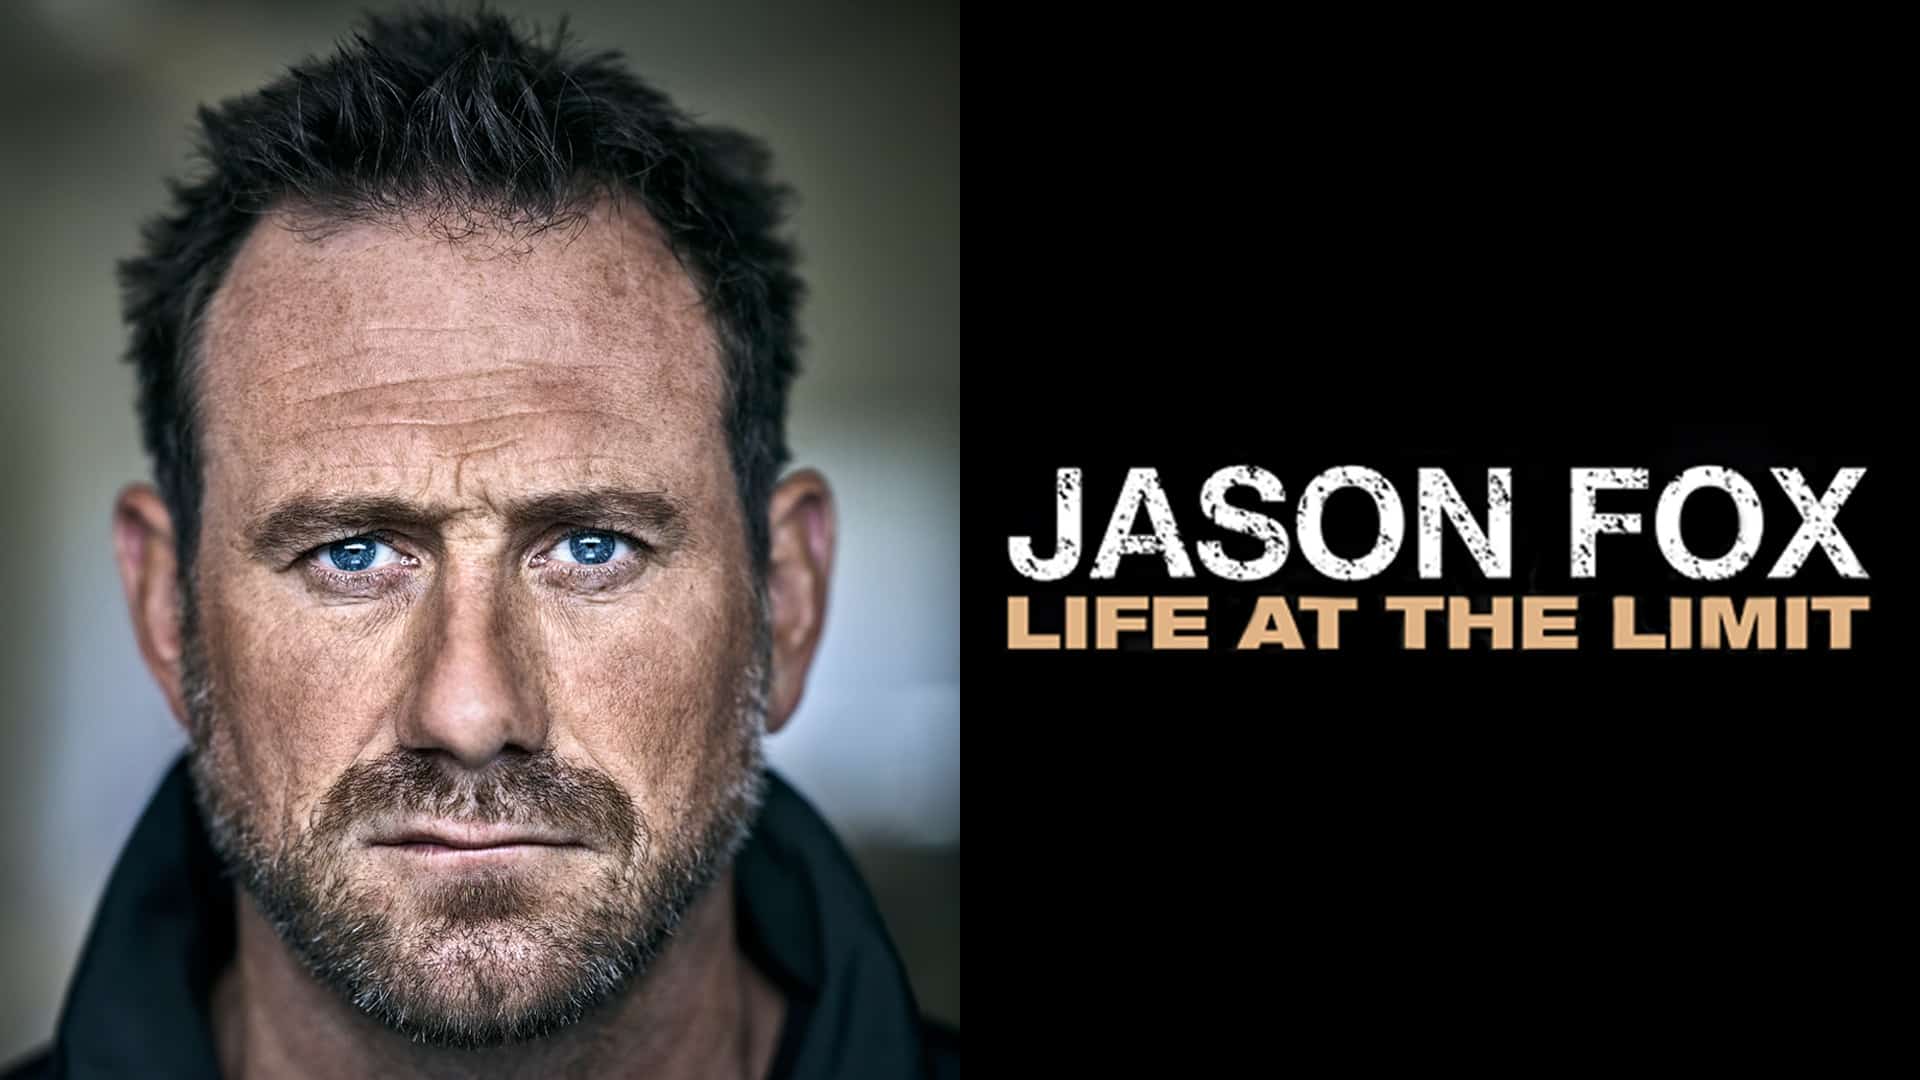 Jason Fox Life at the Limit